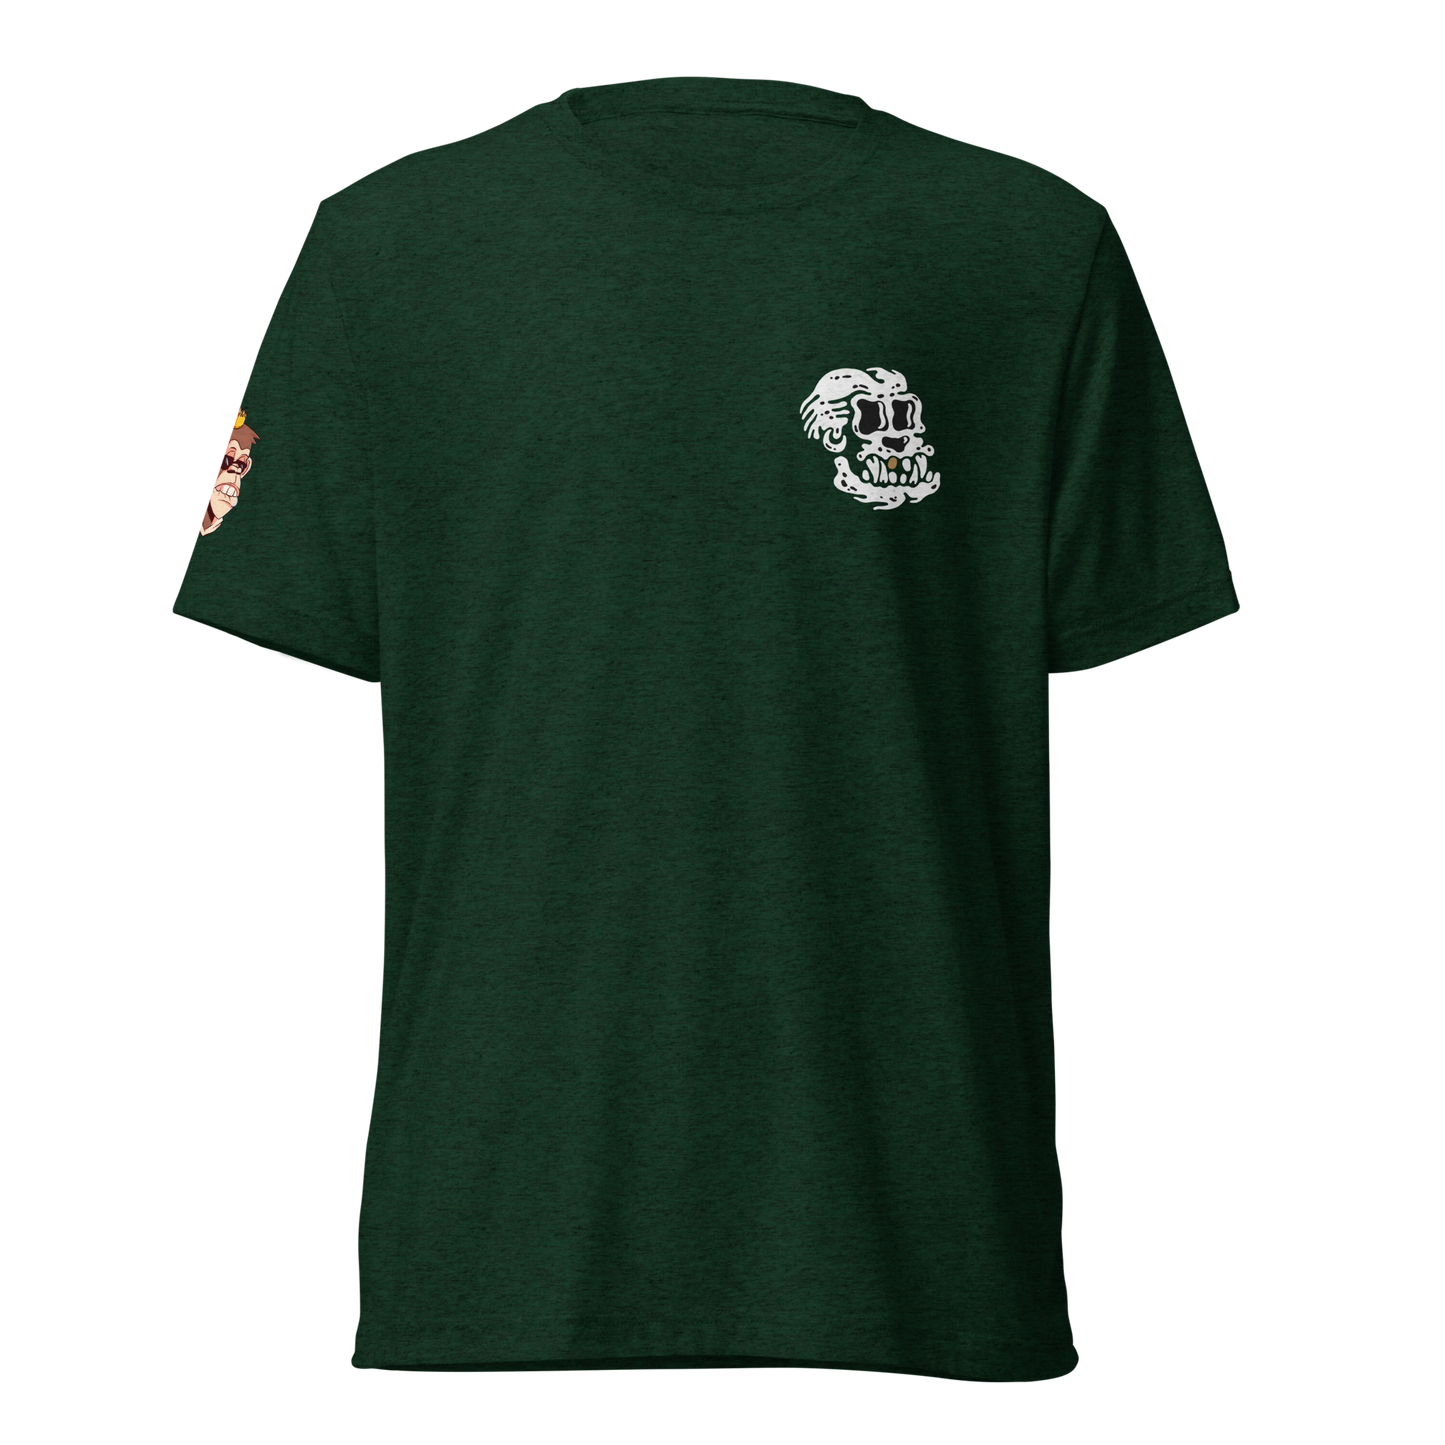 Cosmos Ape Alliance super soft short sleeve t-shirt